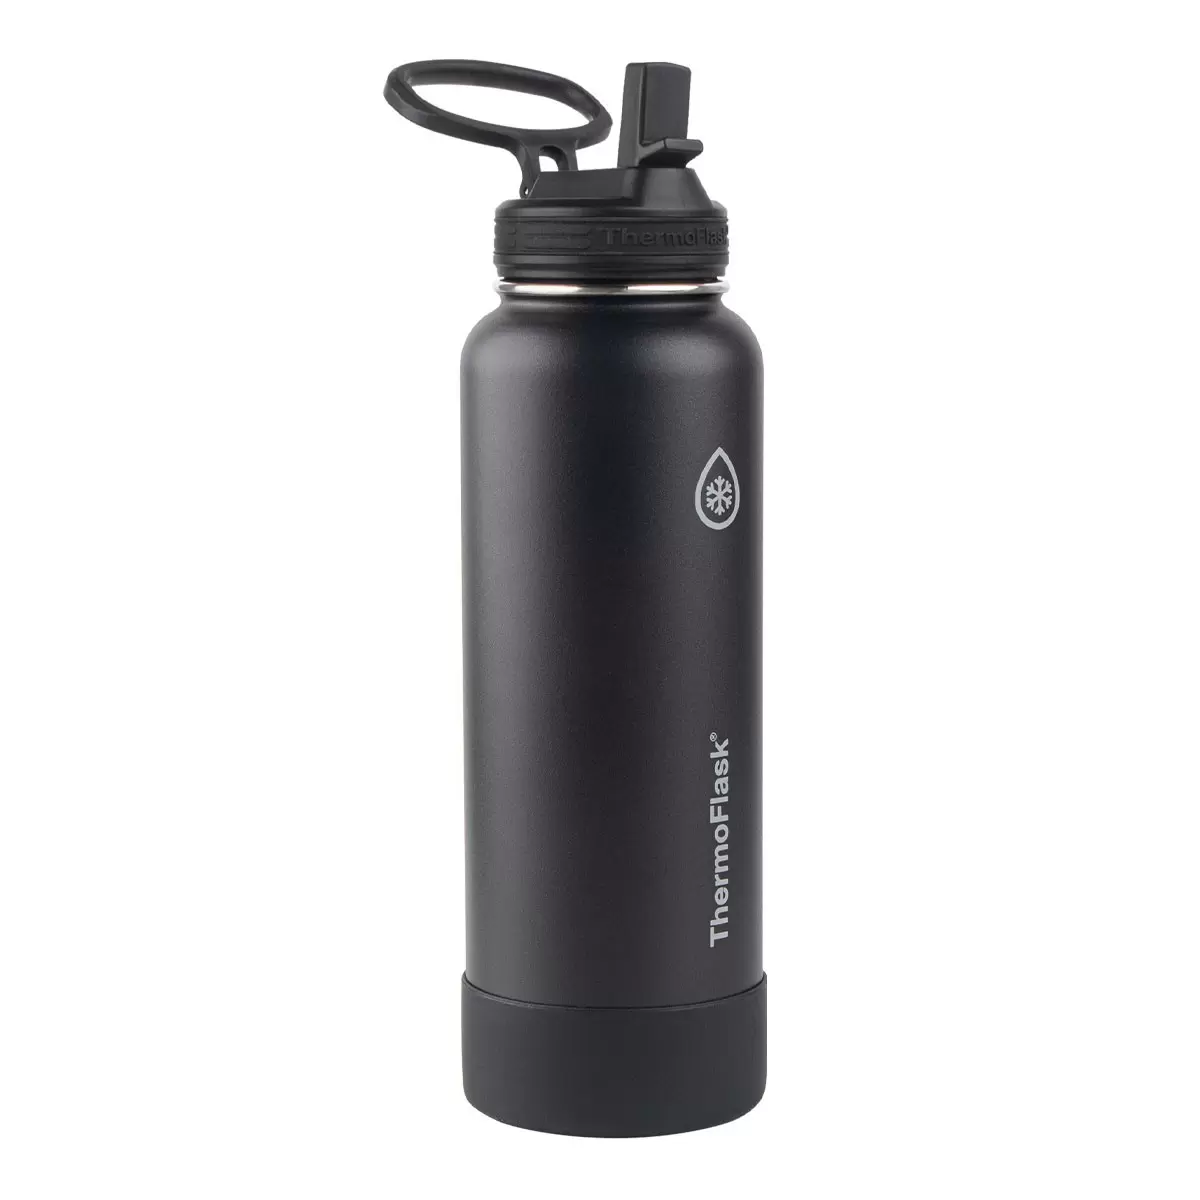 ThermoFlask 不鏽鋼保冷瓶 1.2公升 X 2件組 奶油白 + 黑